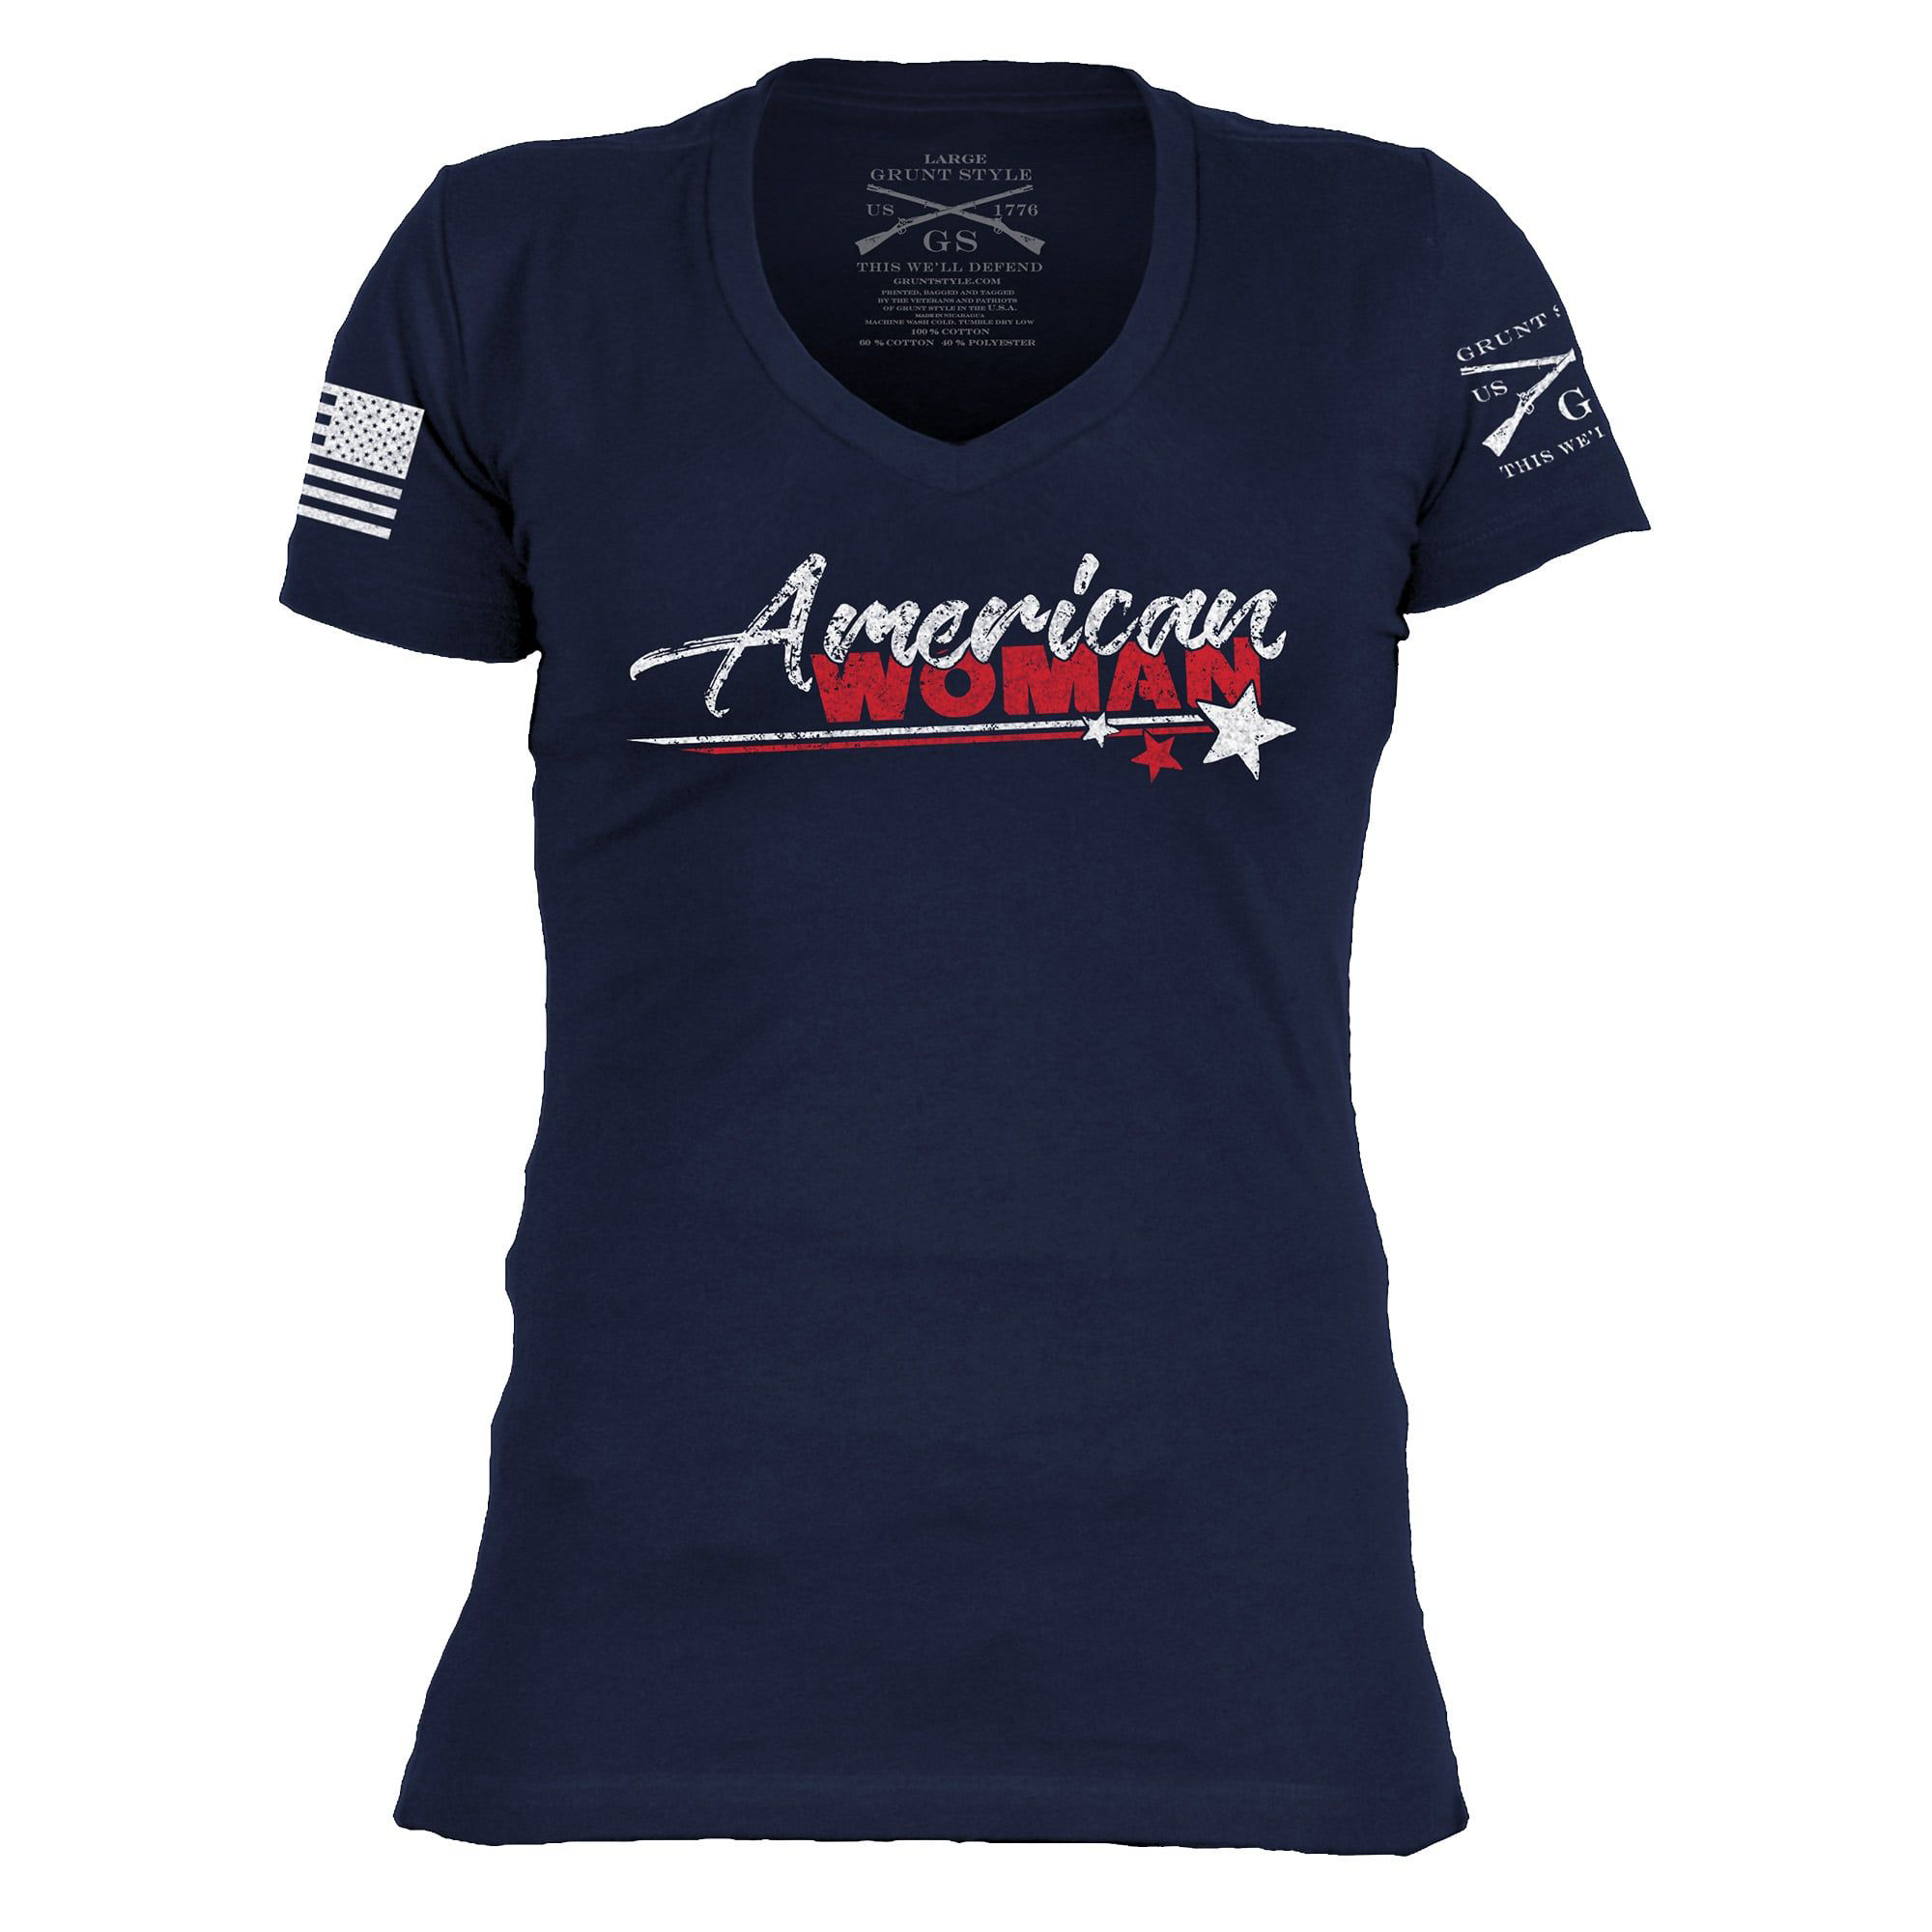 Grunt Style American Woman Short-Sleeve Tee for Ladies - Midnight Navy - XL